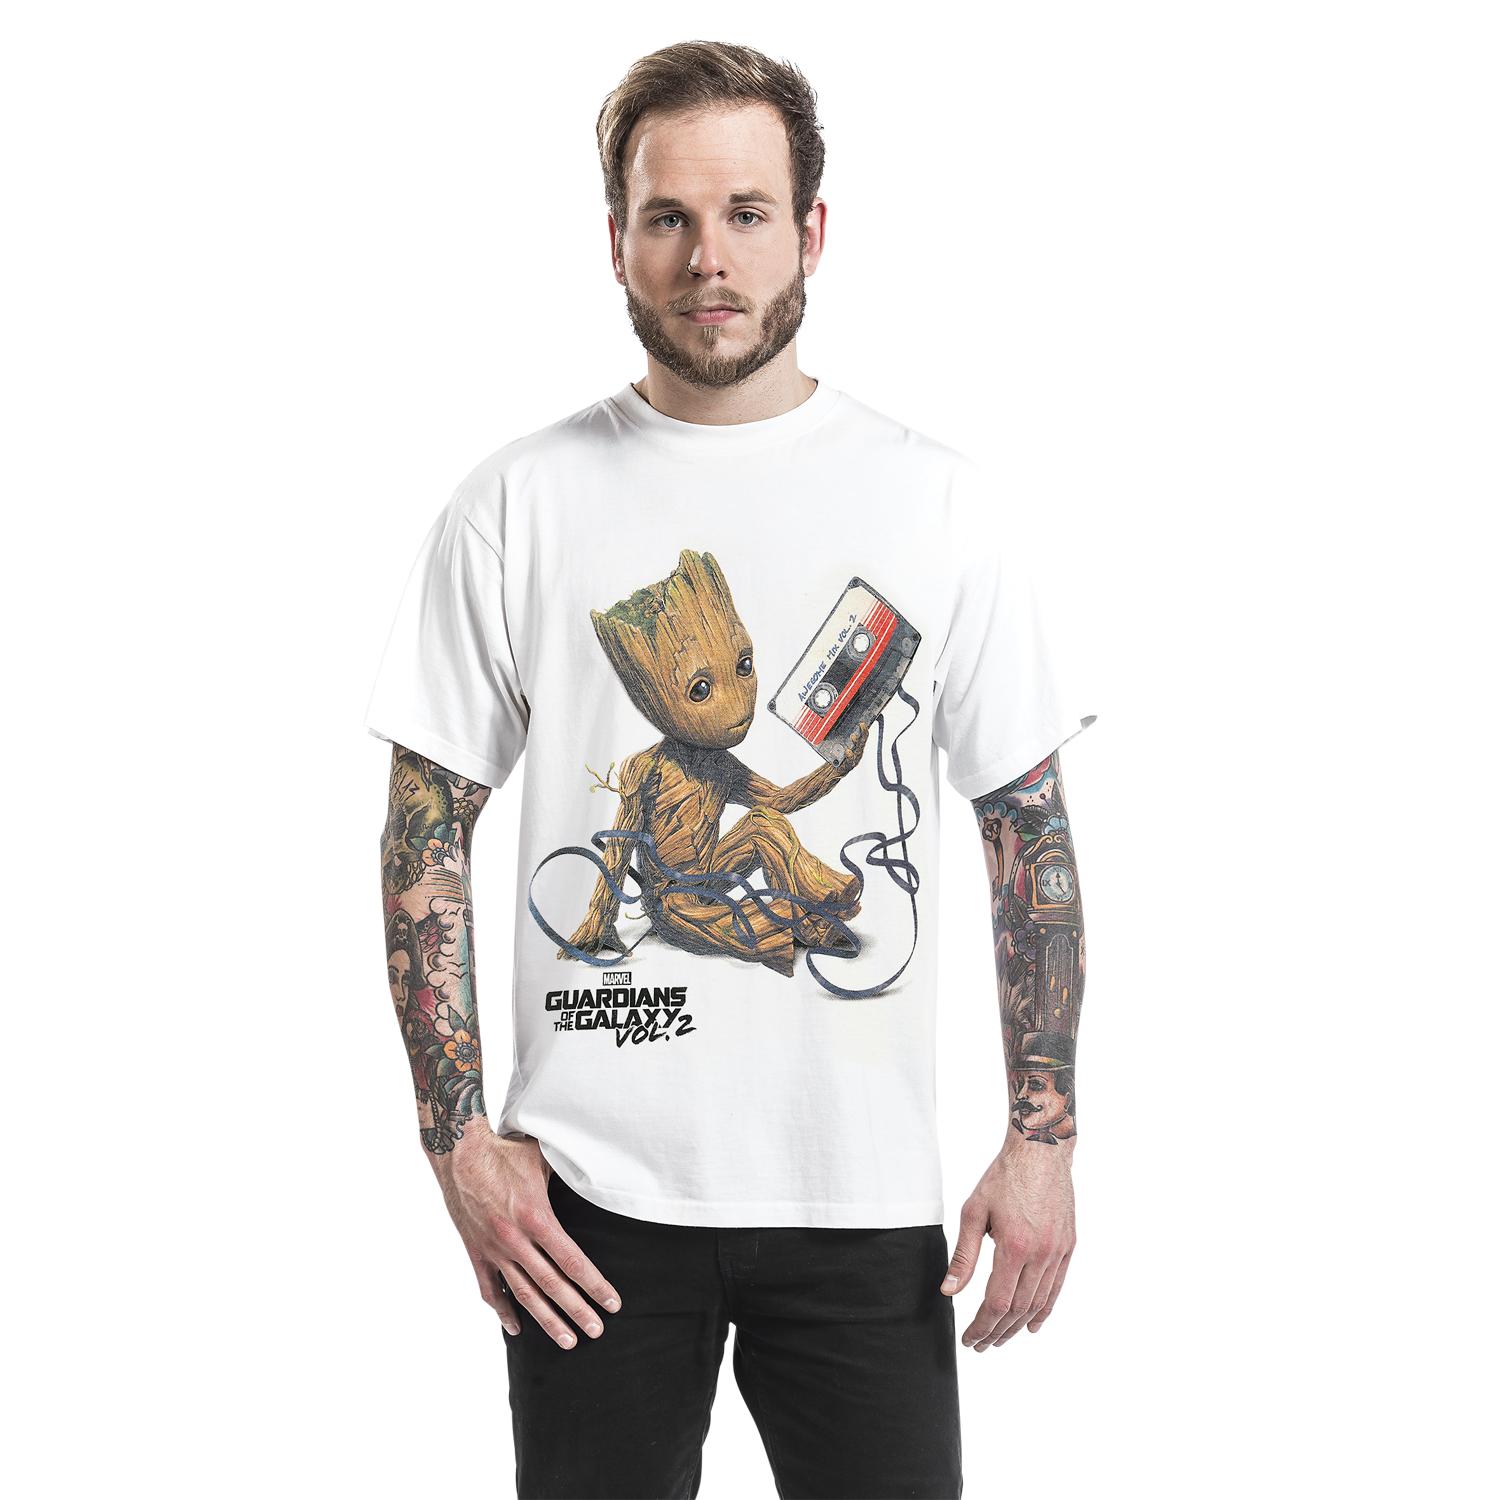 Groot & Tape T-shirt Design - Fancy T-shirts